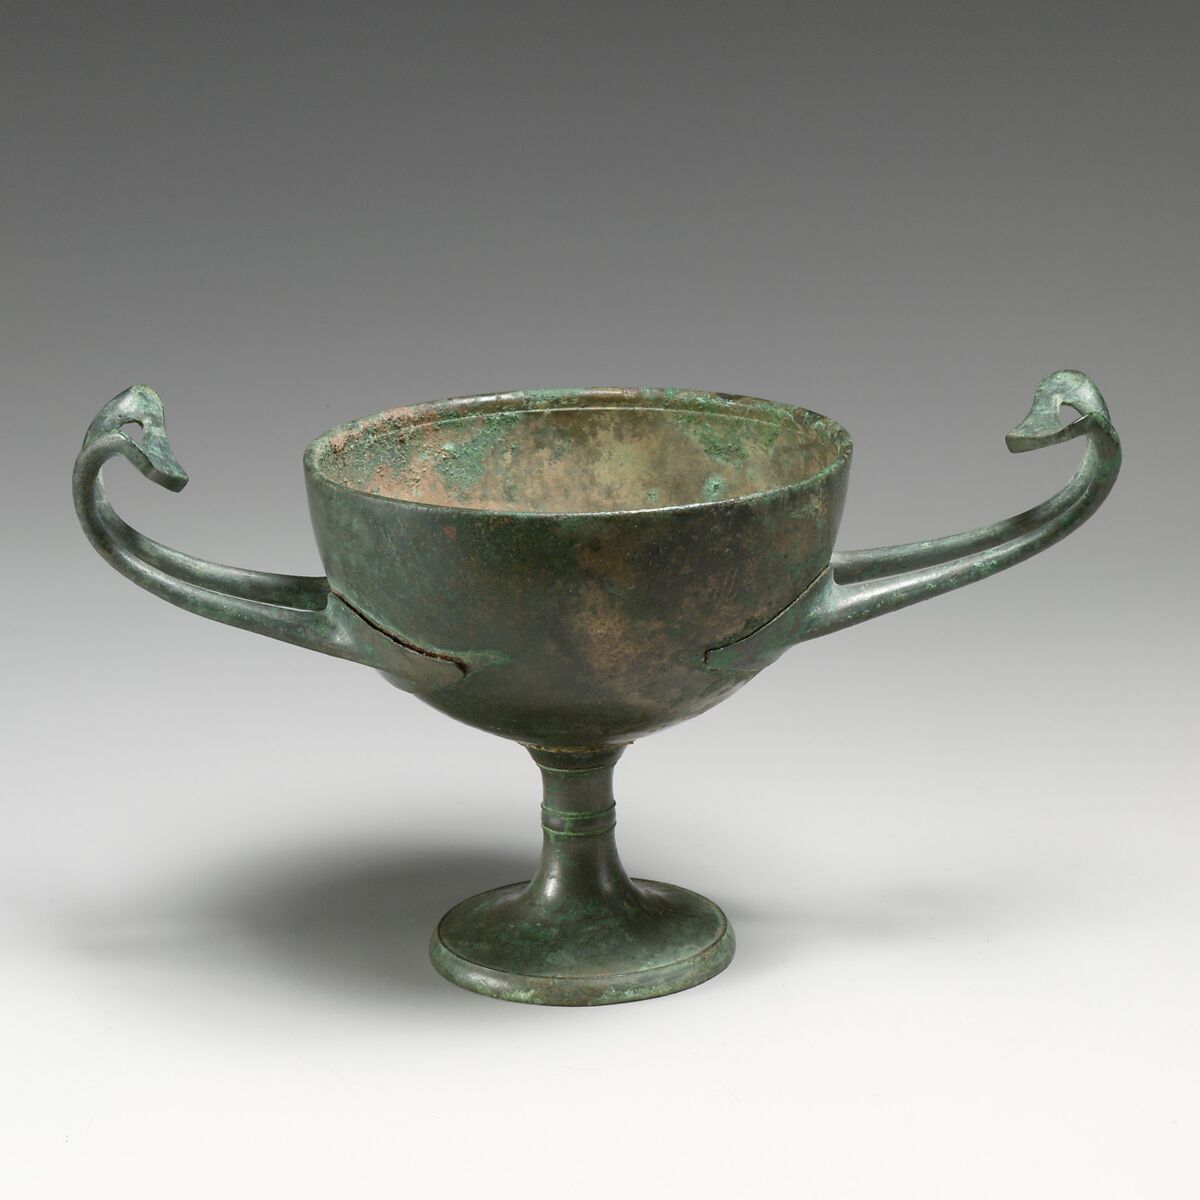 Bronze kylix (drinking cup)